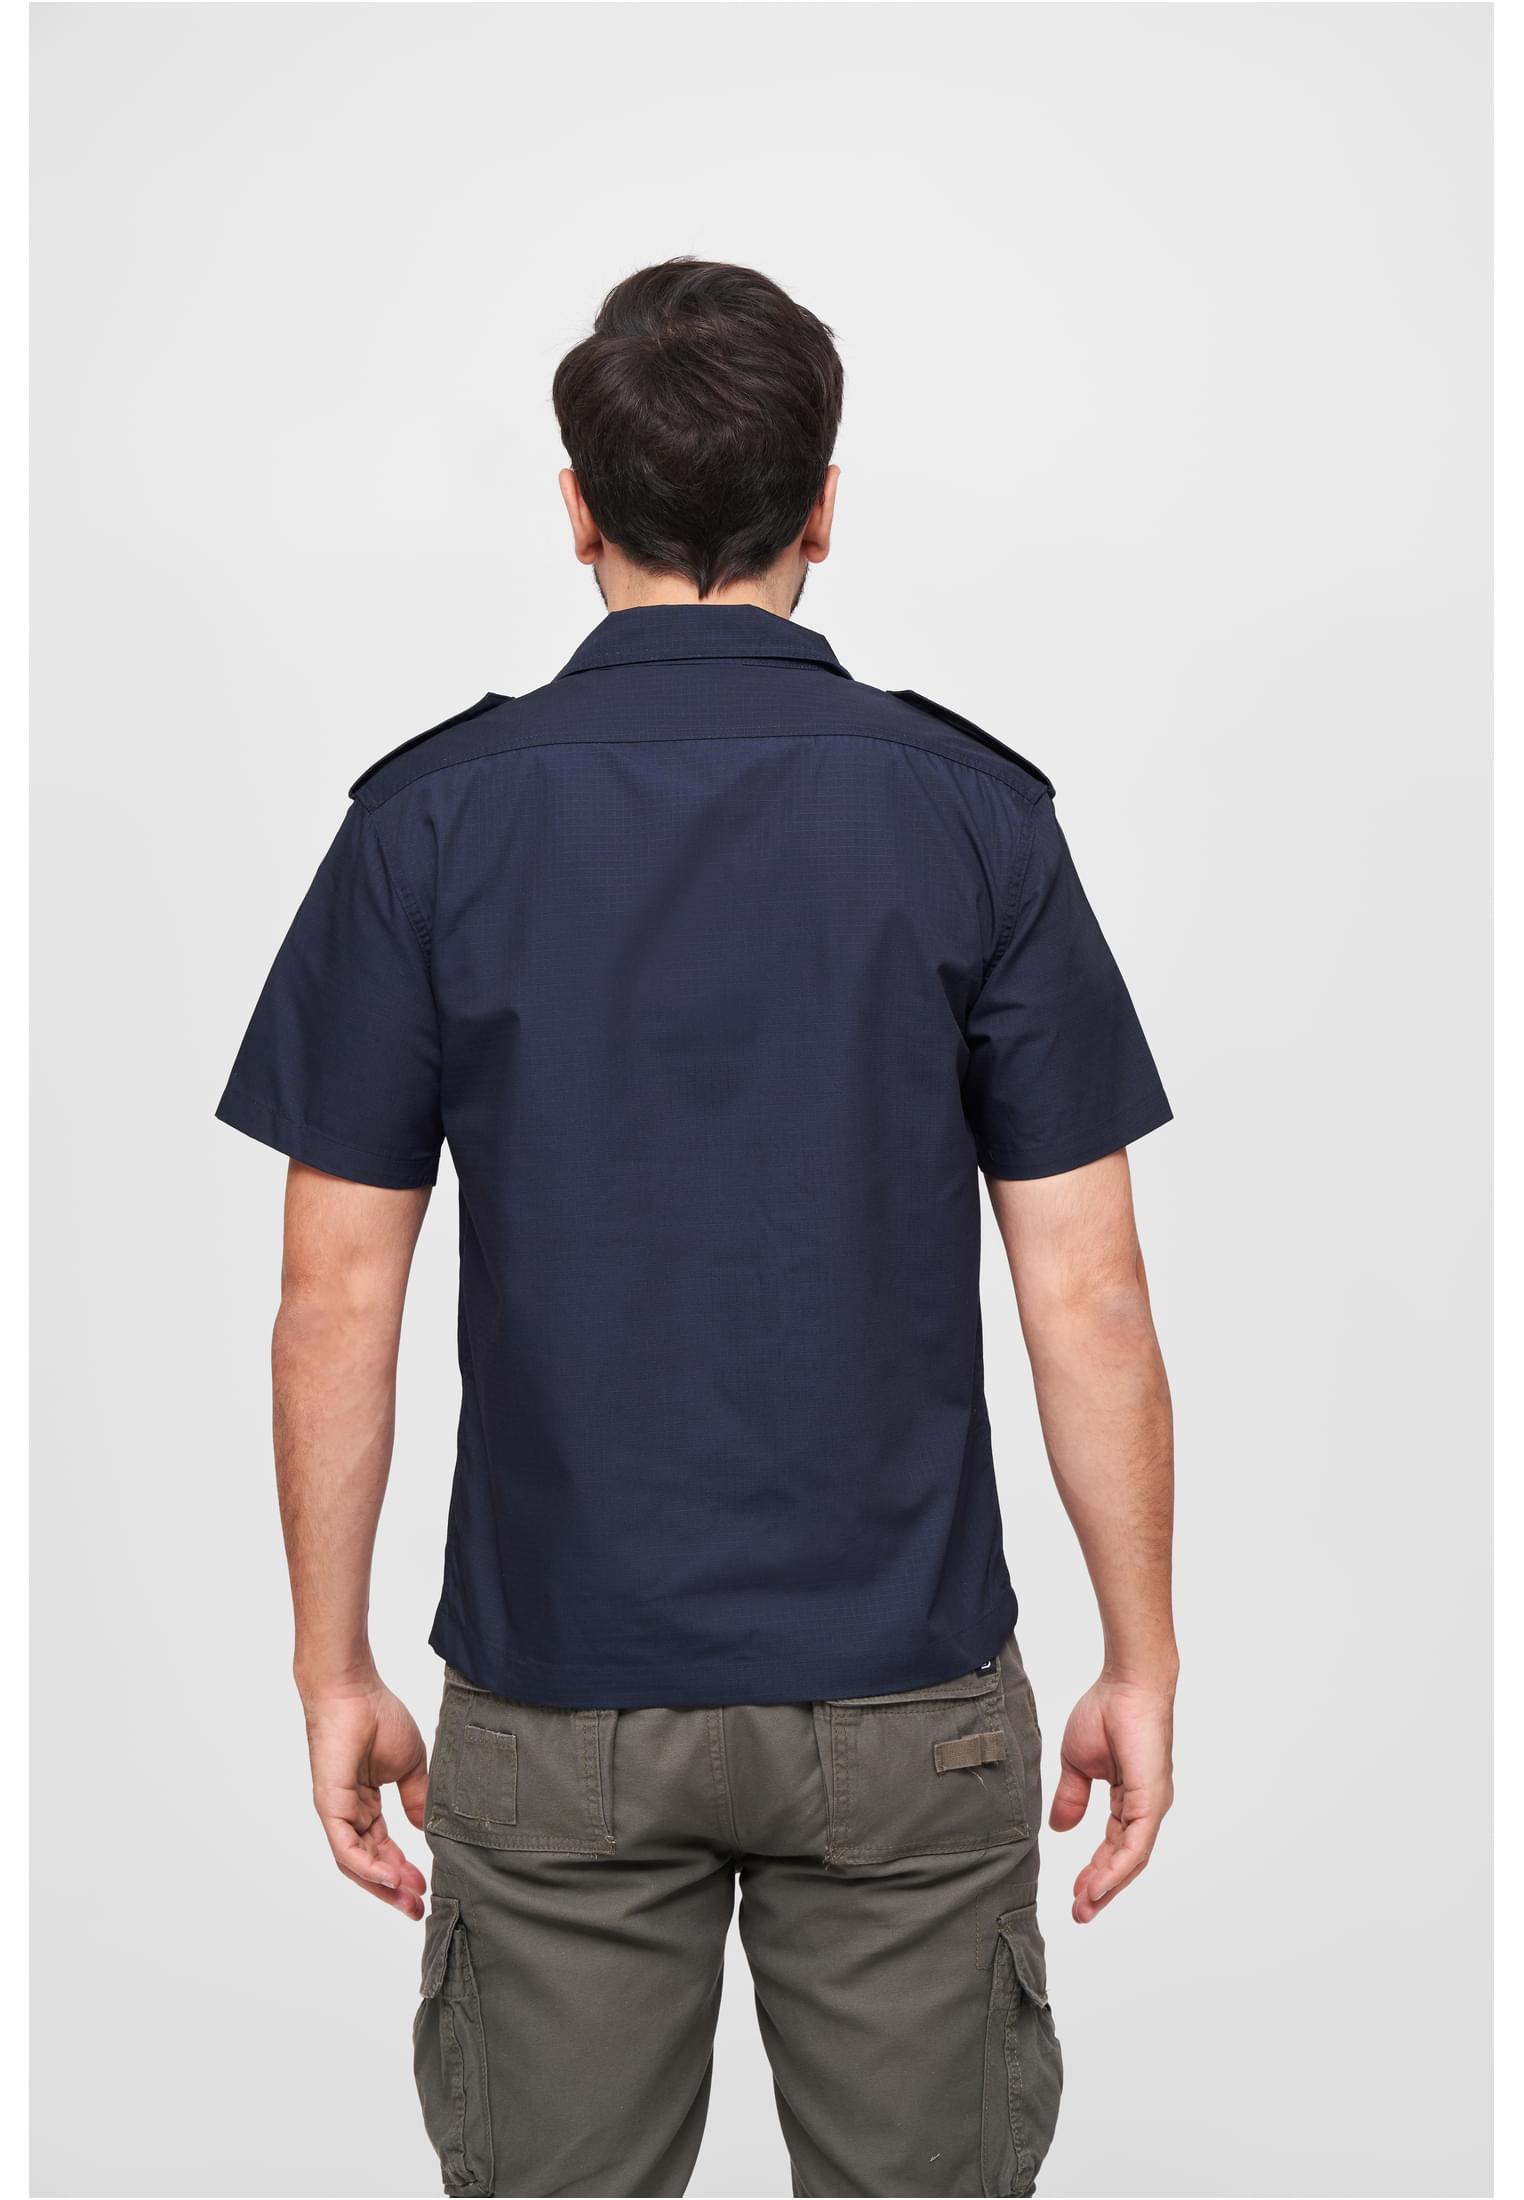 Hemden US Shirt Ripstop shortsleeve in Farbe navy